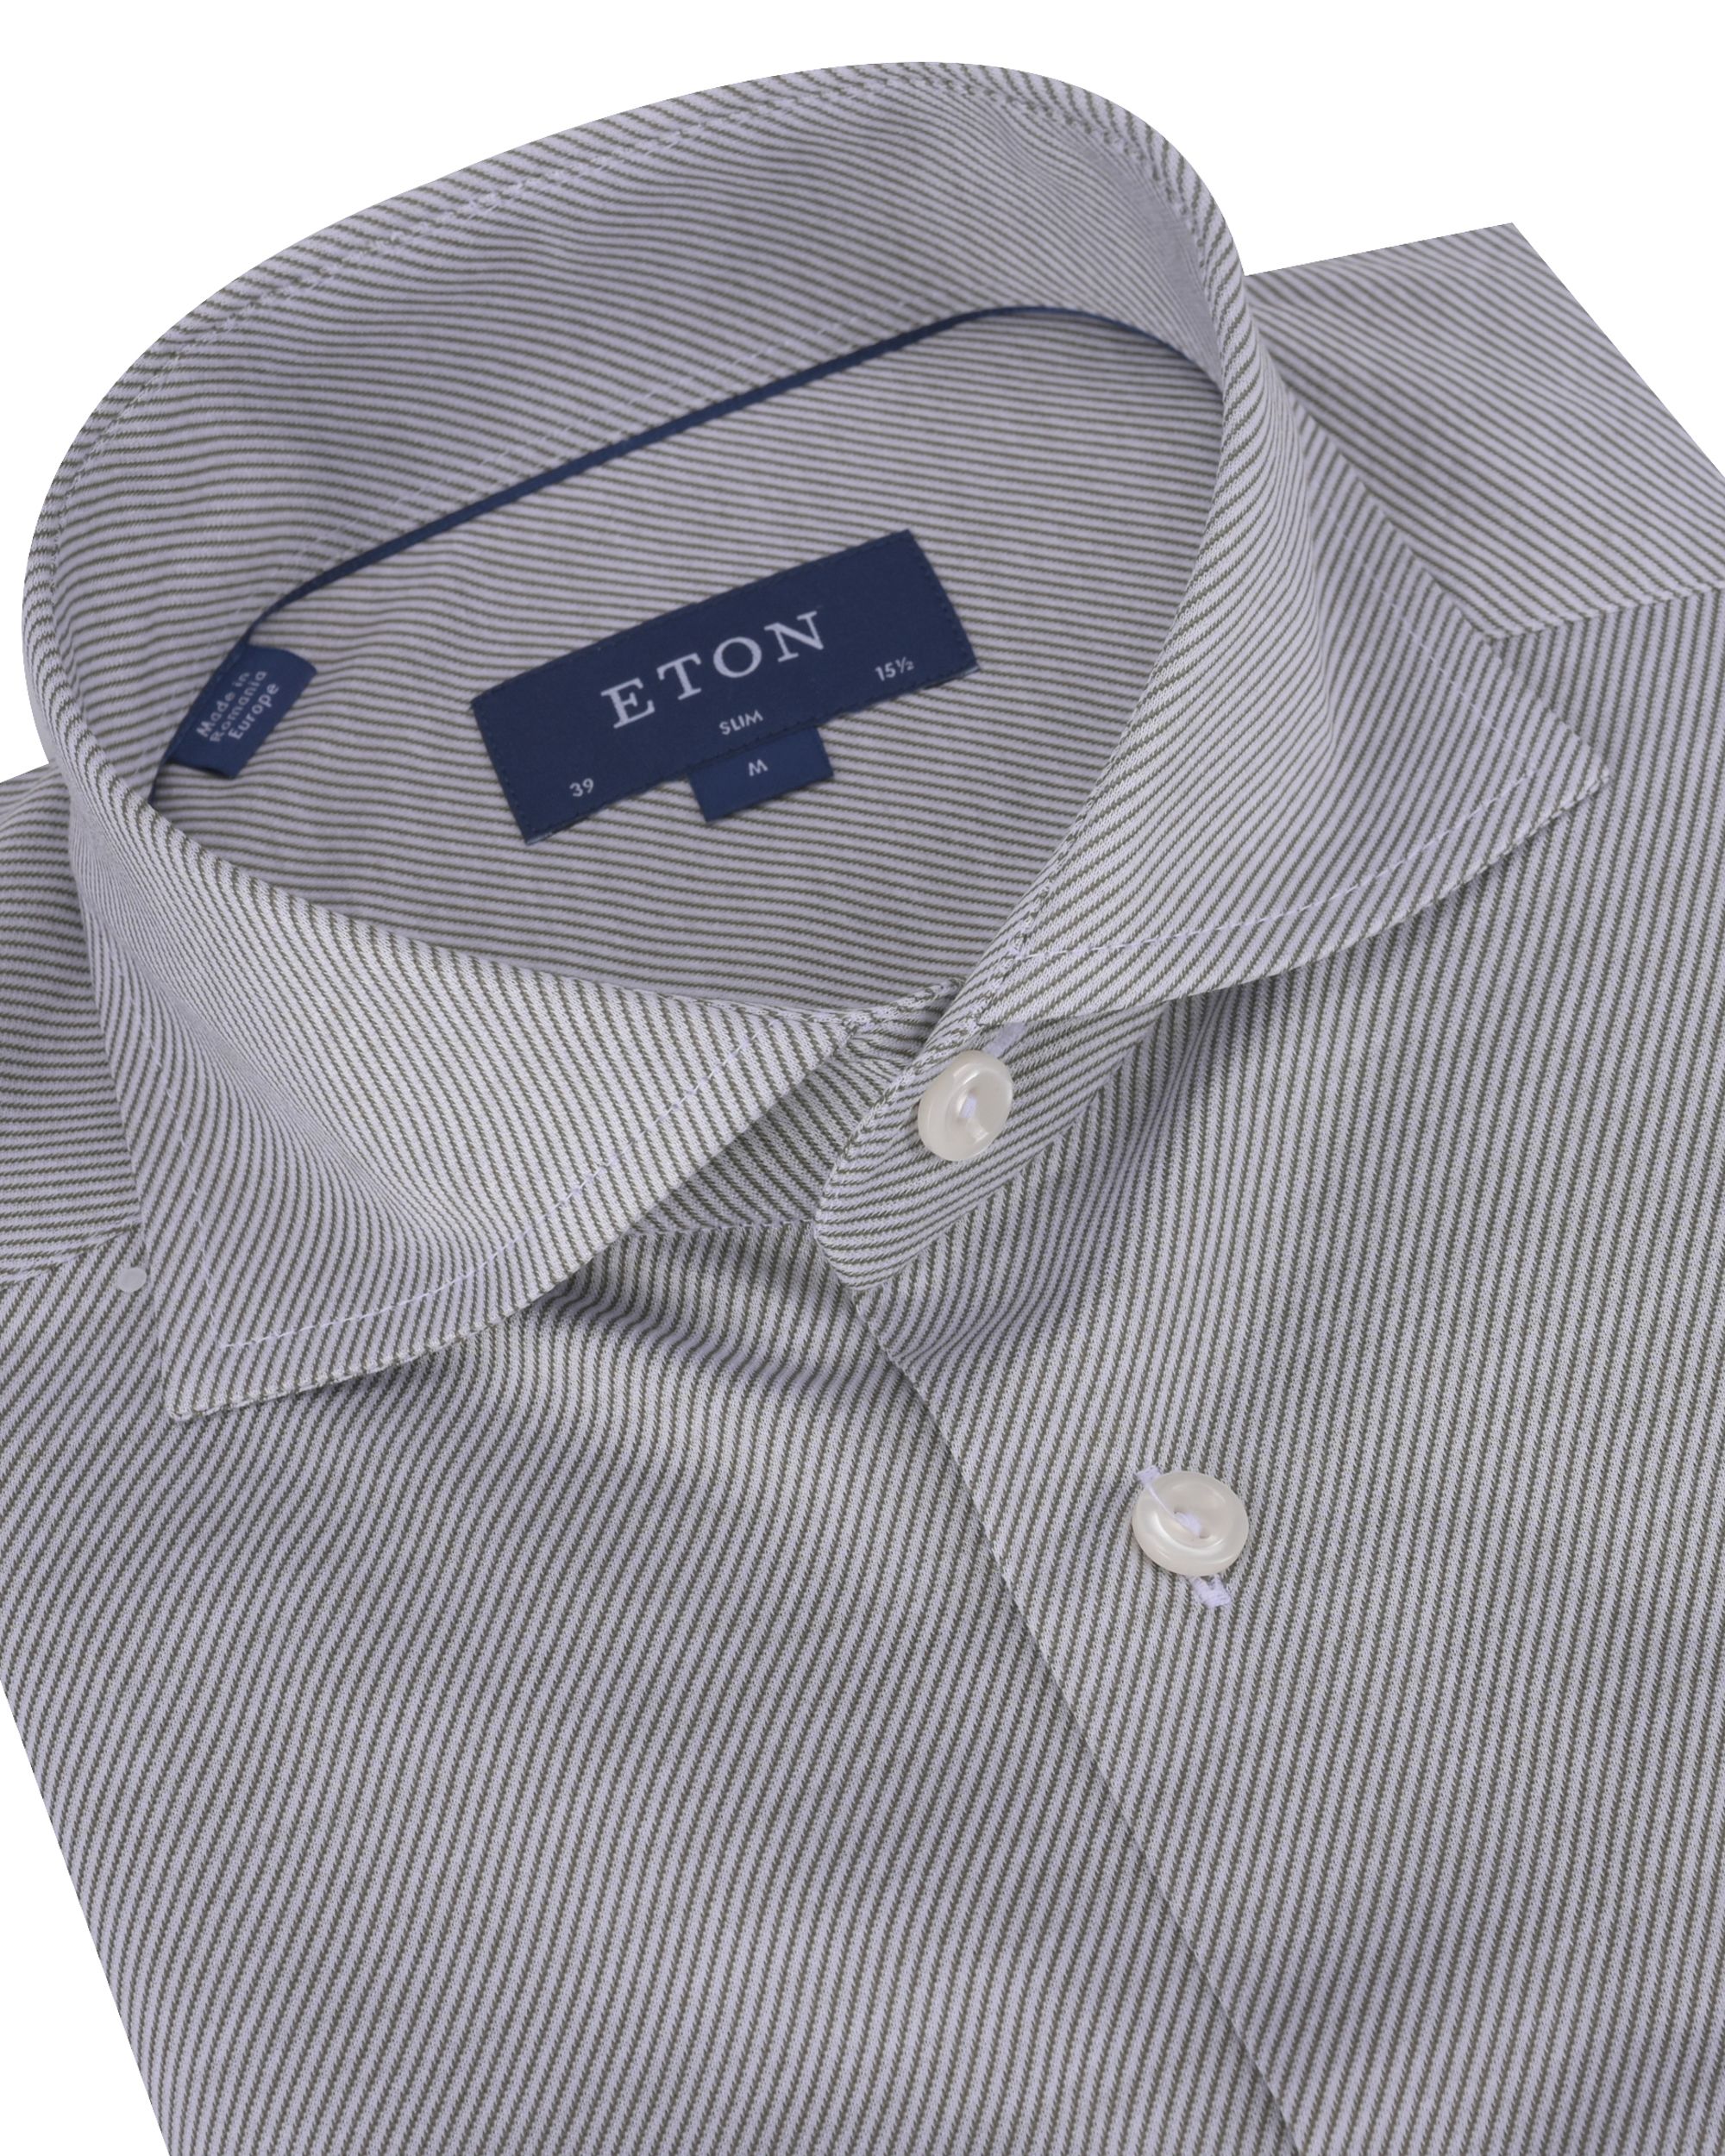 ETON Slim Overhemd LM Groen 086942-001-38